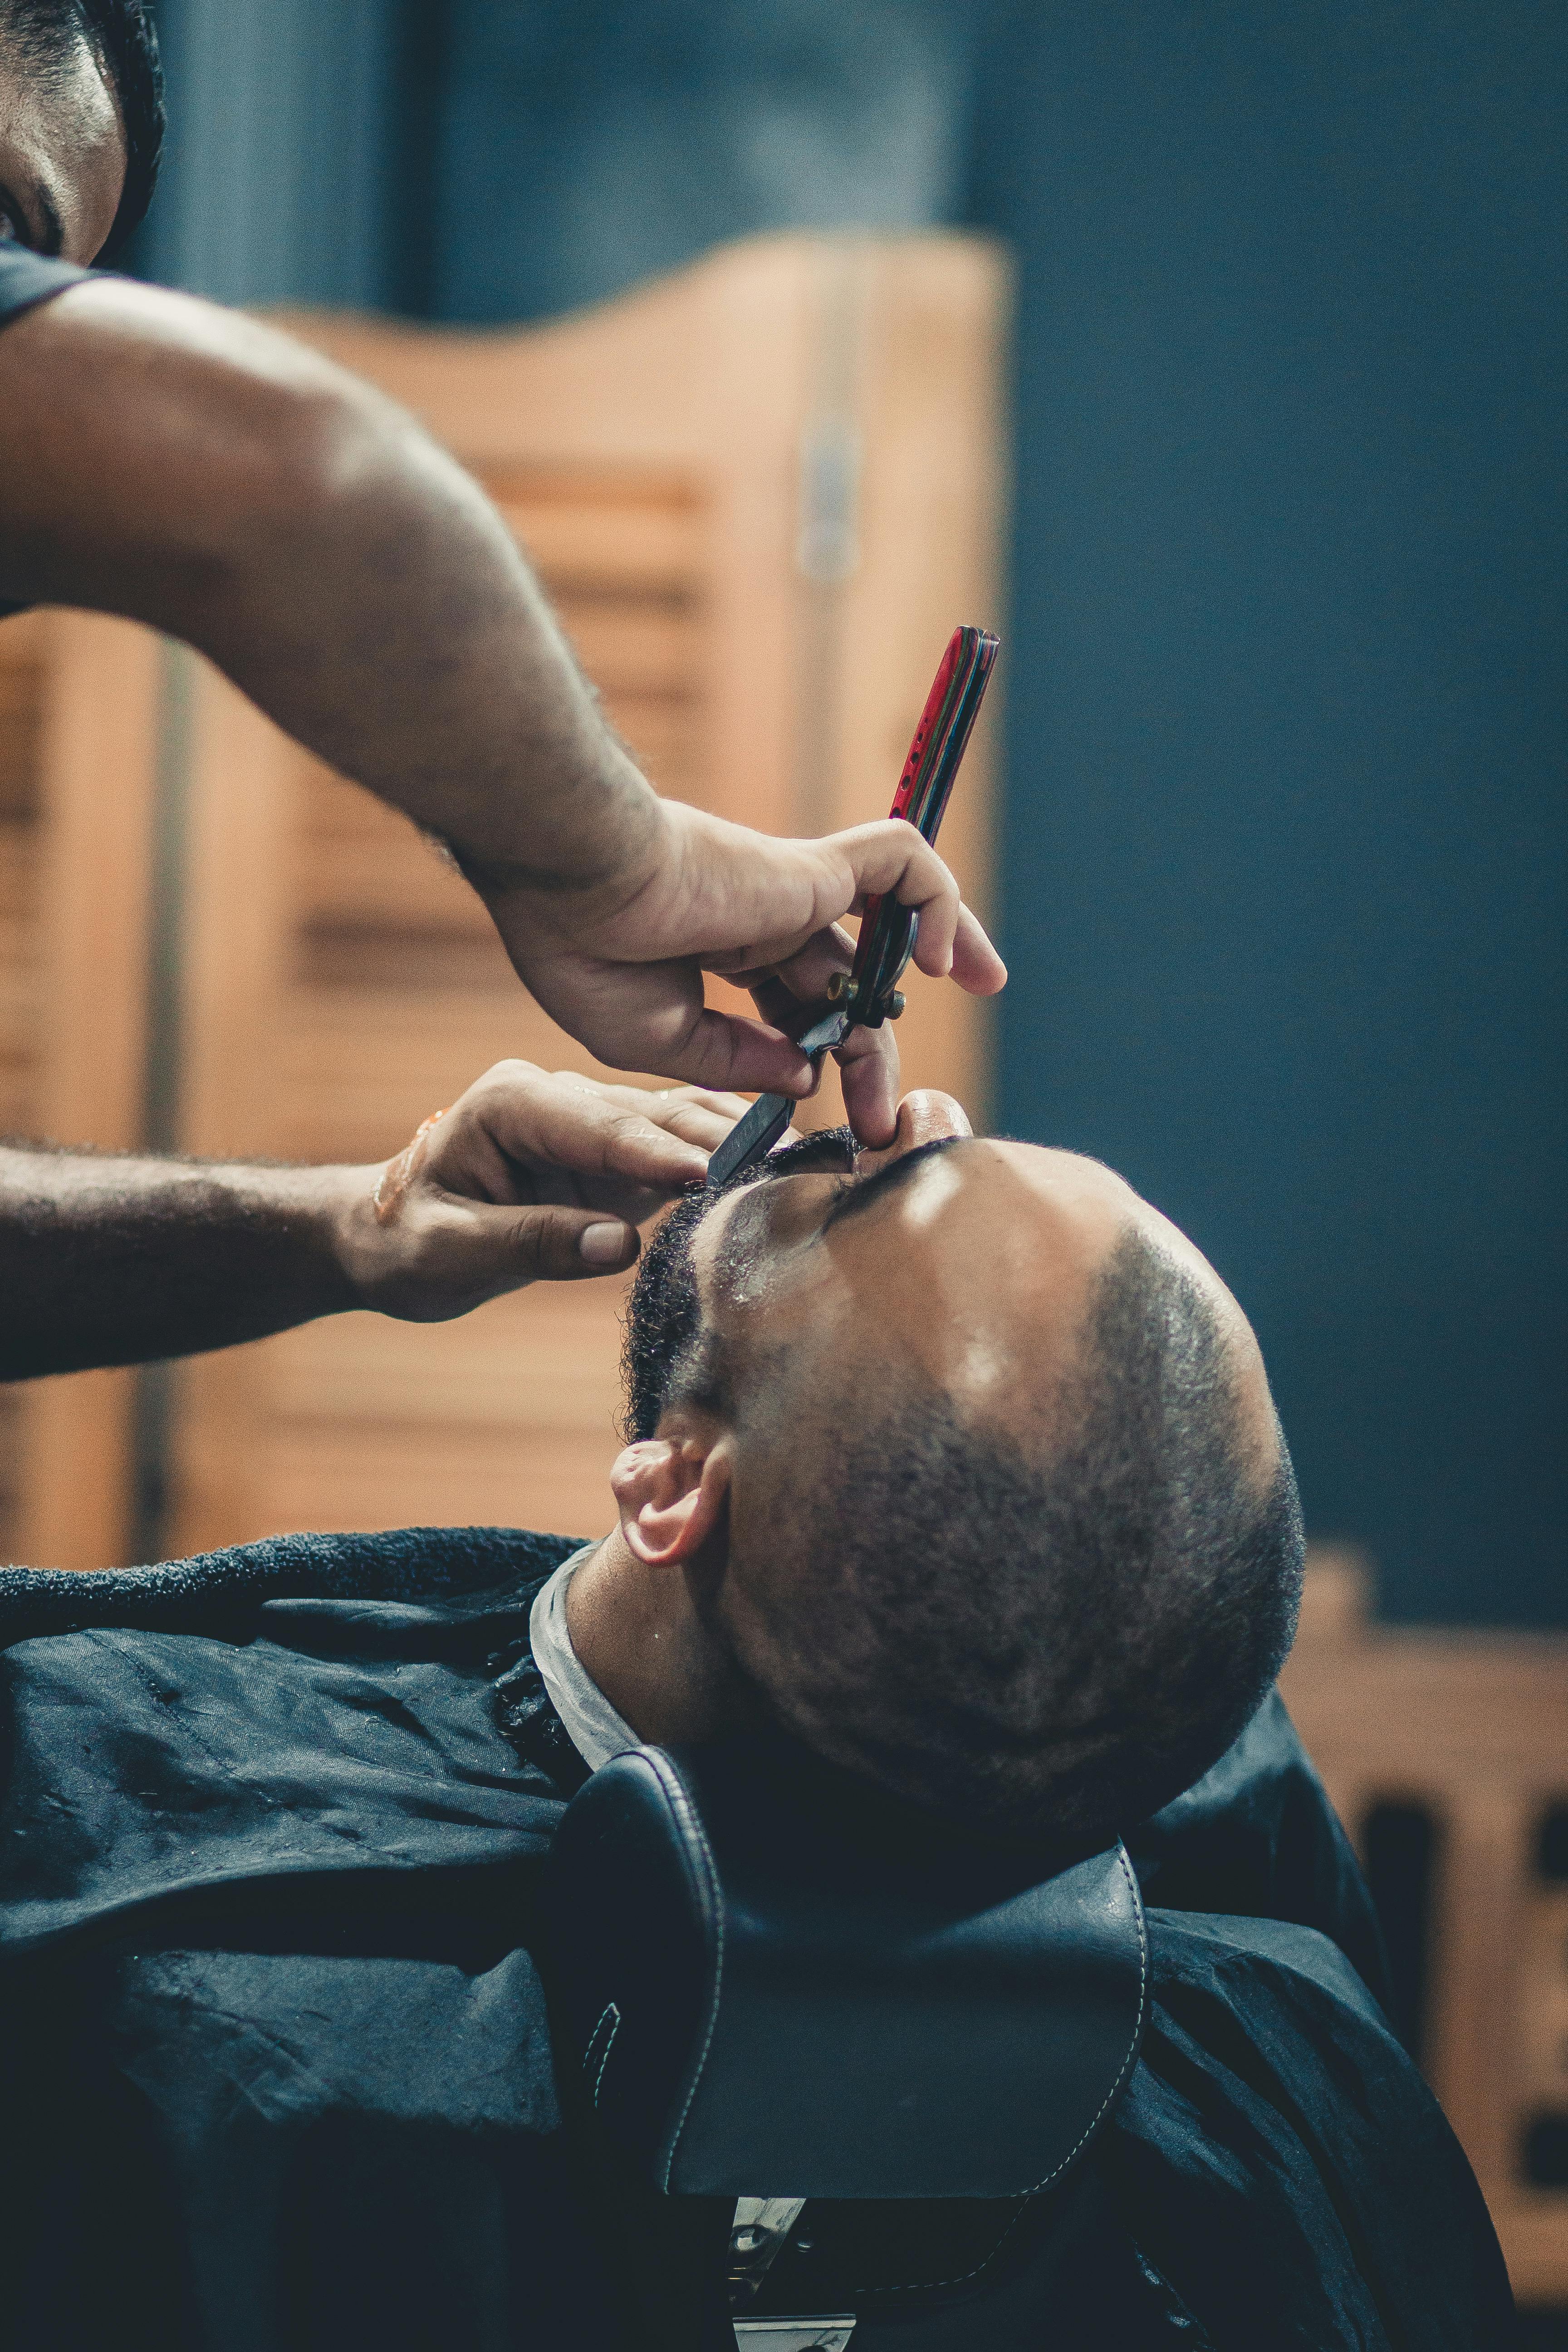 Barbershop Photos, Download The BEST Free Barbershop Stock Photos